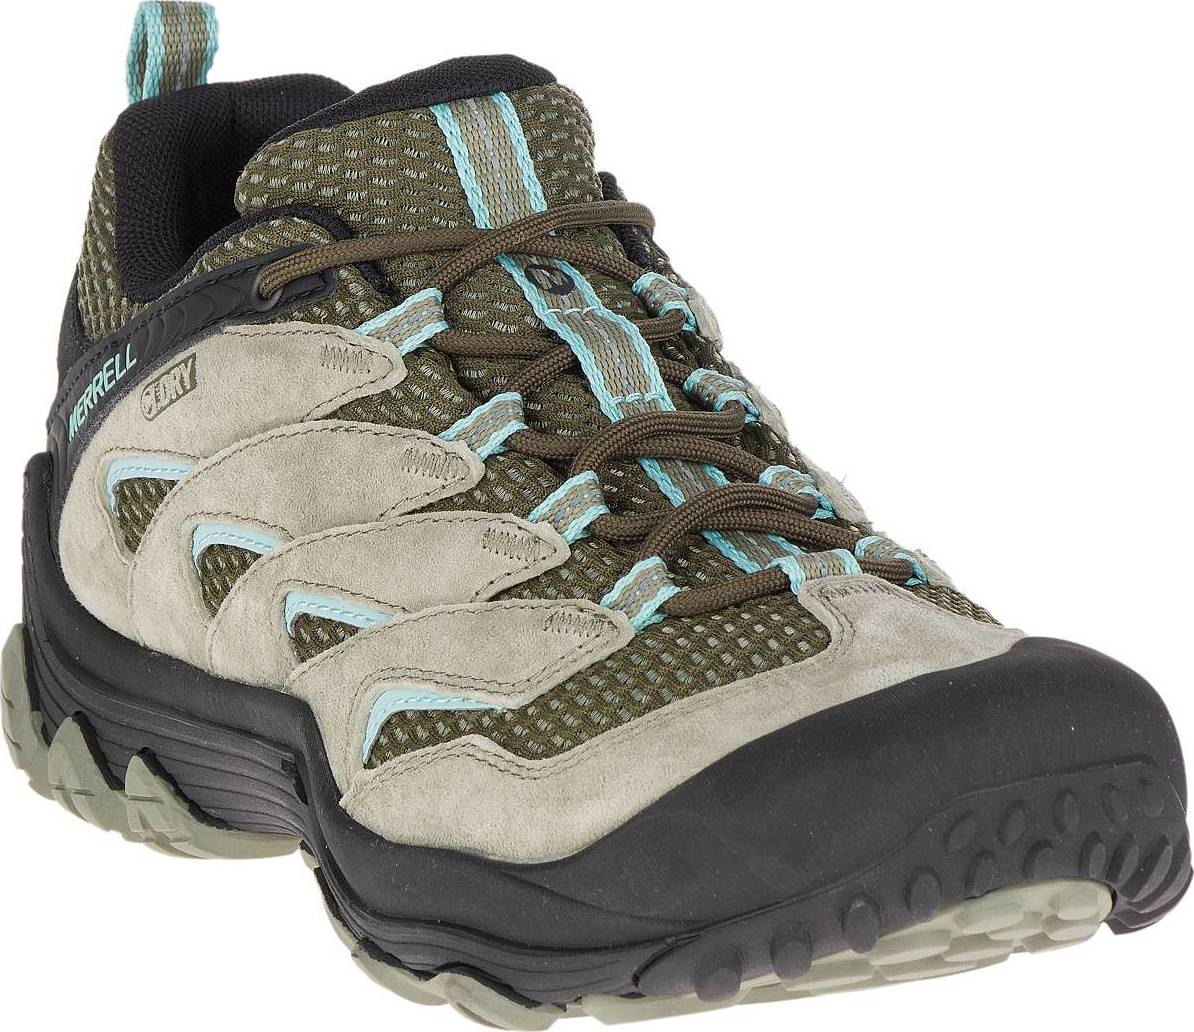 Merrell Chameleon 7 Limit Waterproof Shoes - Women's | Altitude Sports